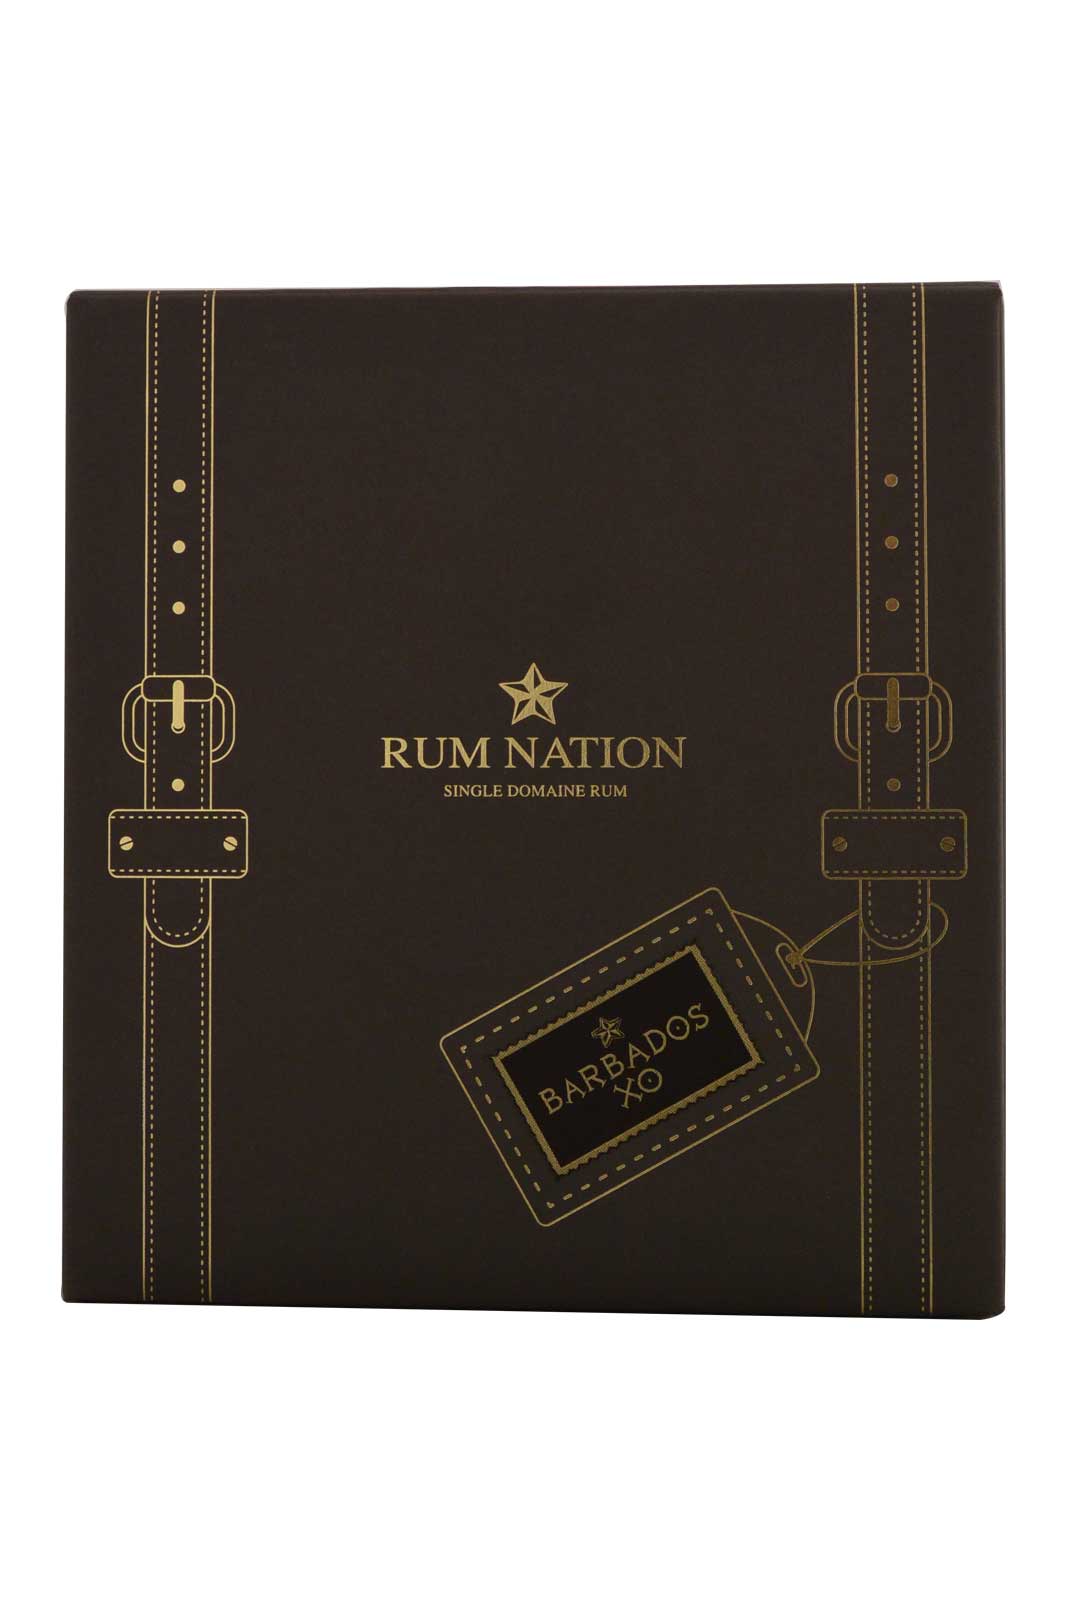 Rum Nation Barbabos XO Anniversary Edition